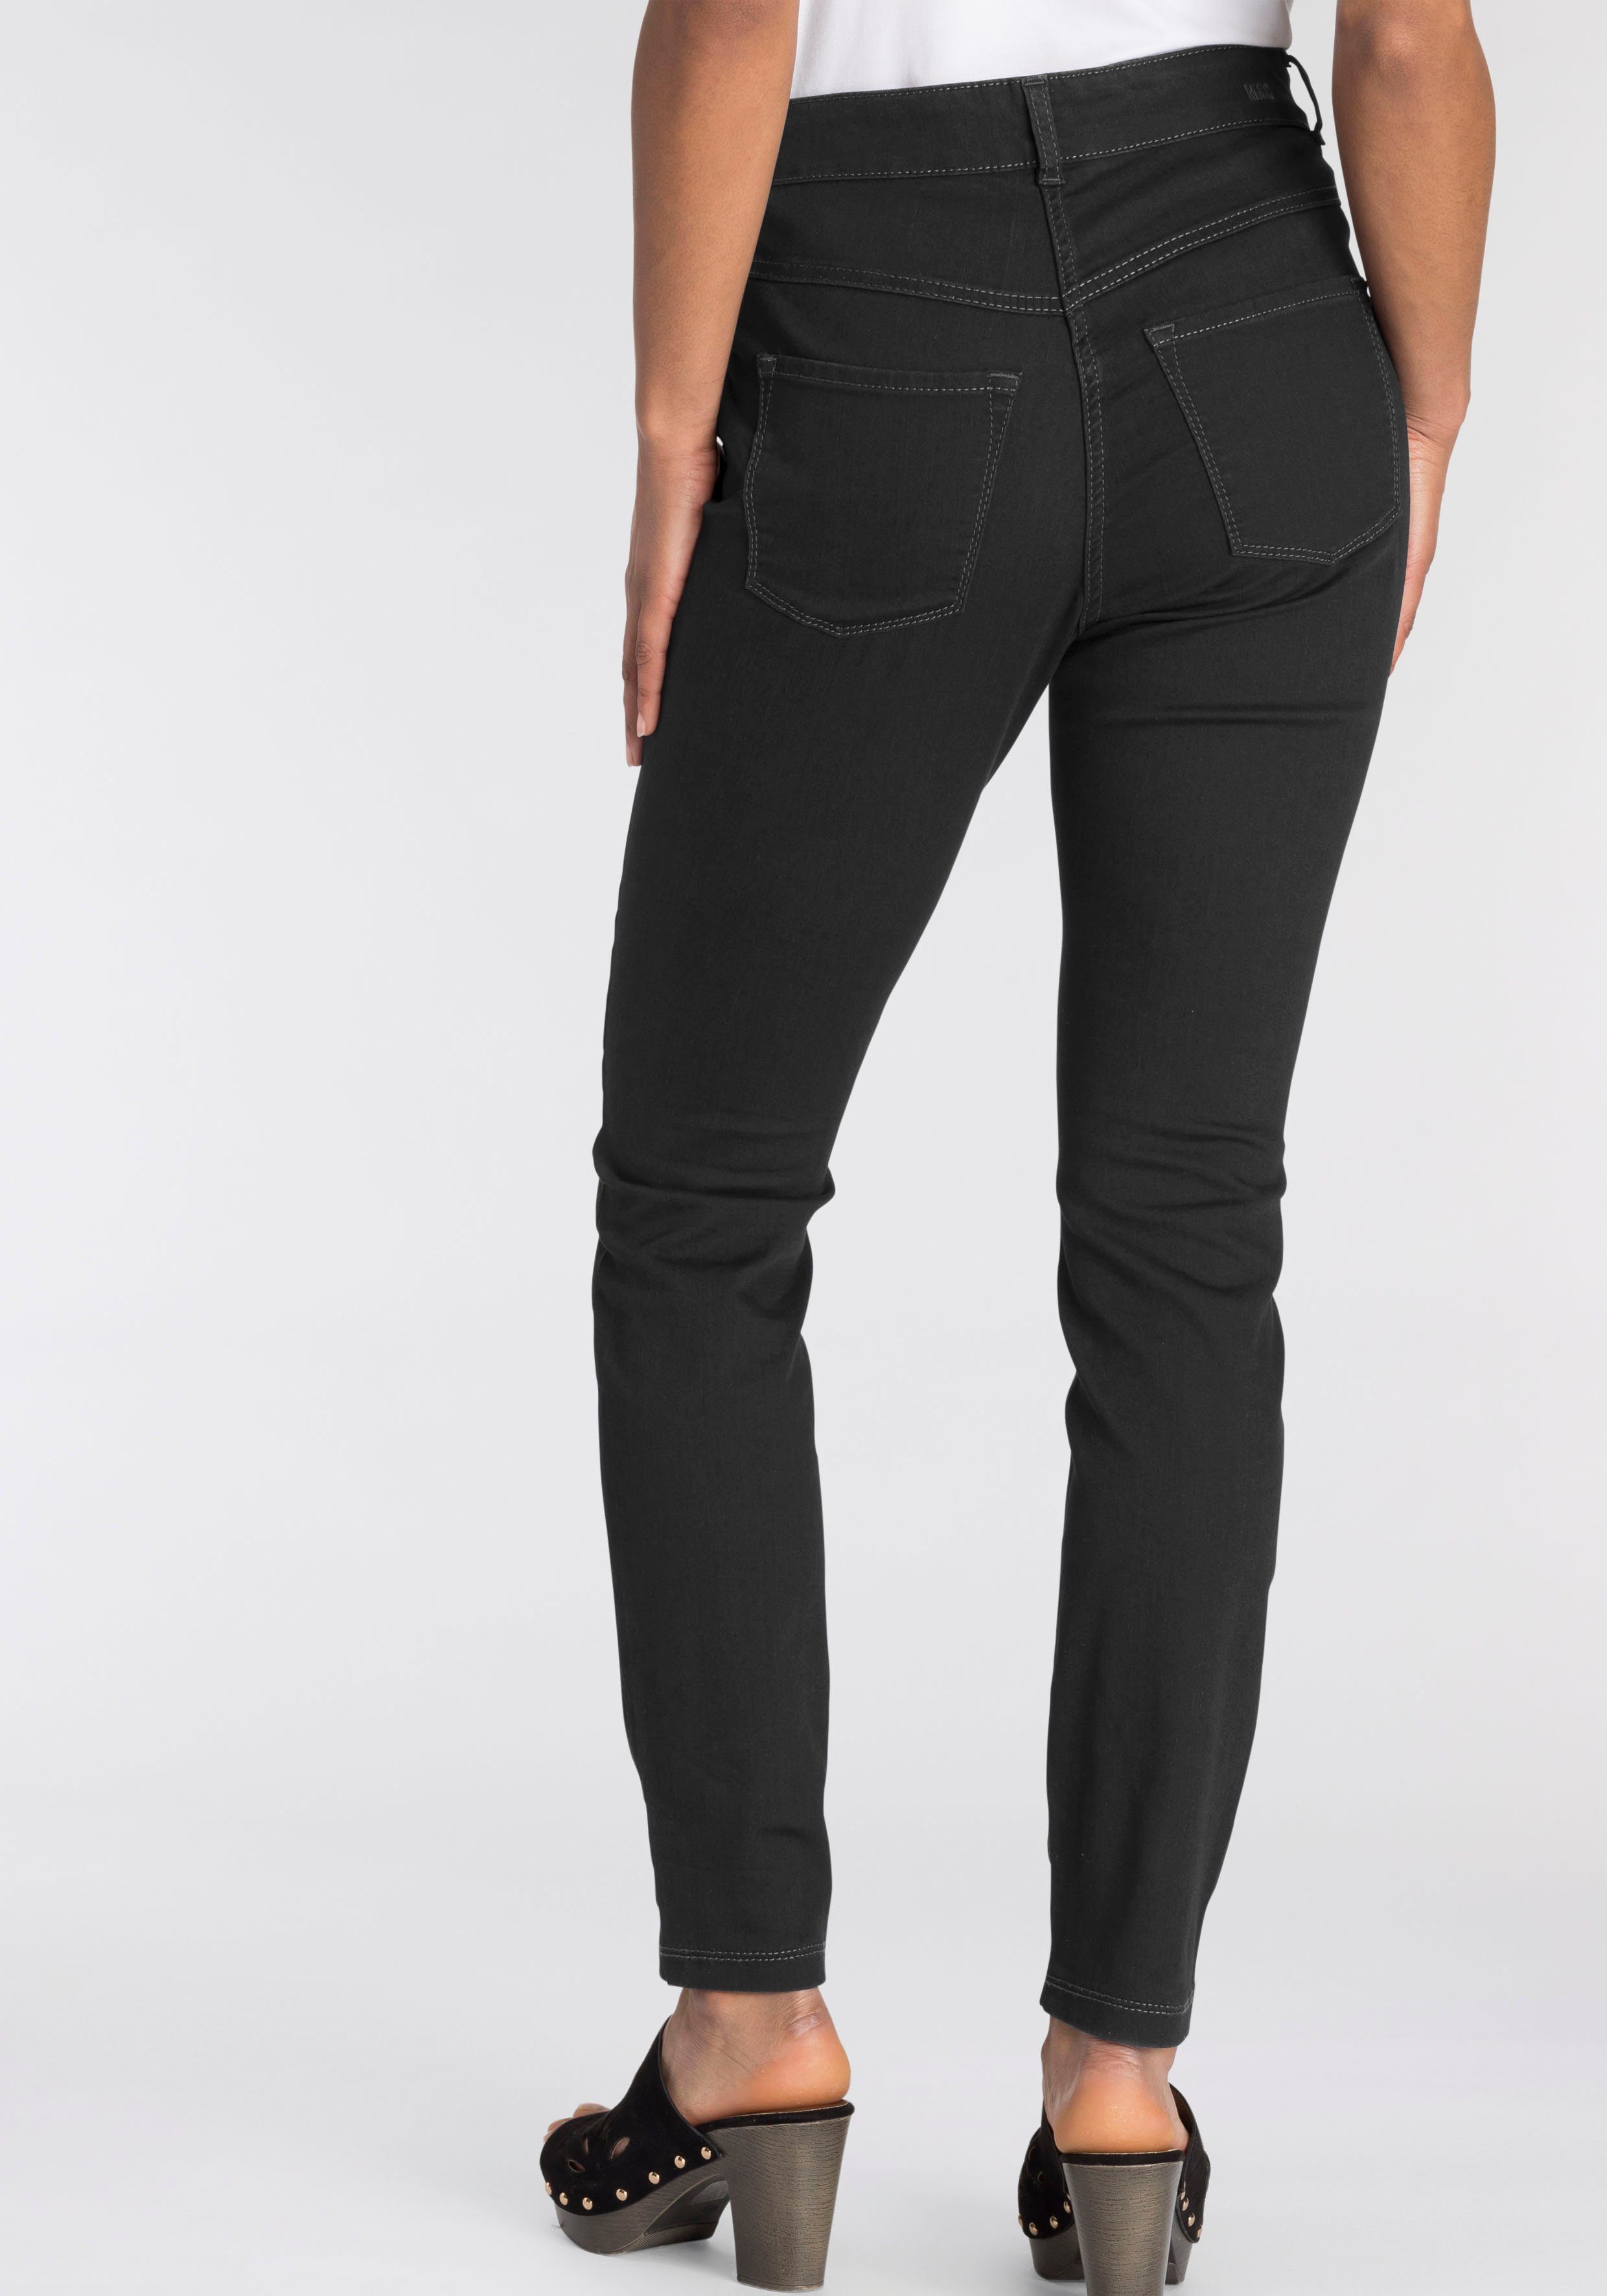 Tag Hiperstretch-Skinny bequem black-black ganzen MAC Power-Stretch sitzt Skinny-fit-Jeans Qualität den